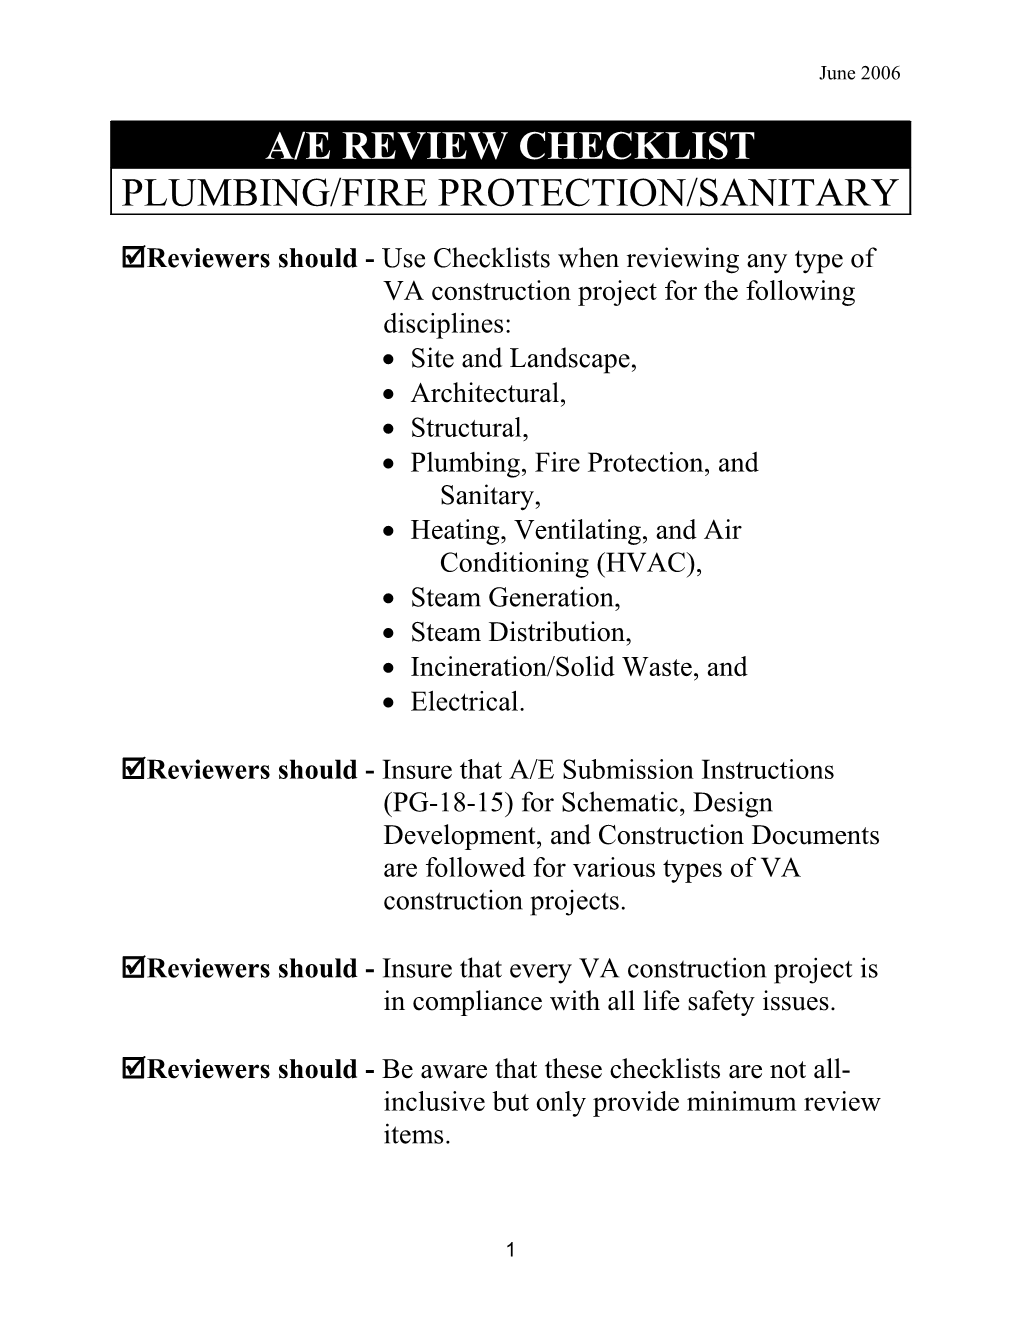 A/E Checklist - Plumbing/Fire Protection/Sanitary